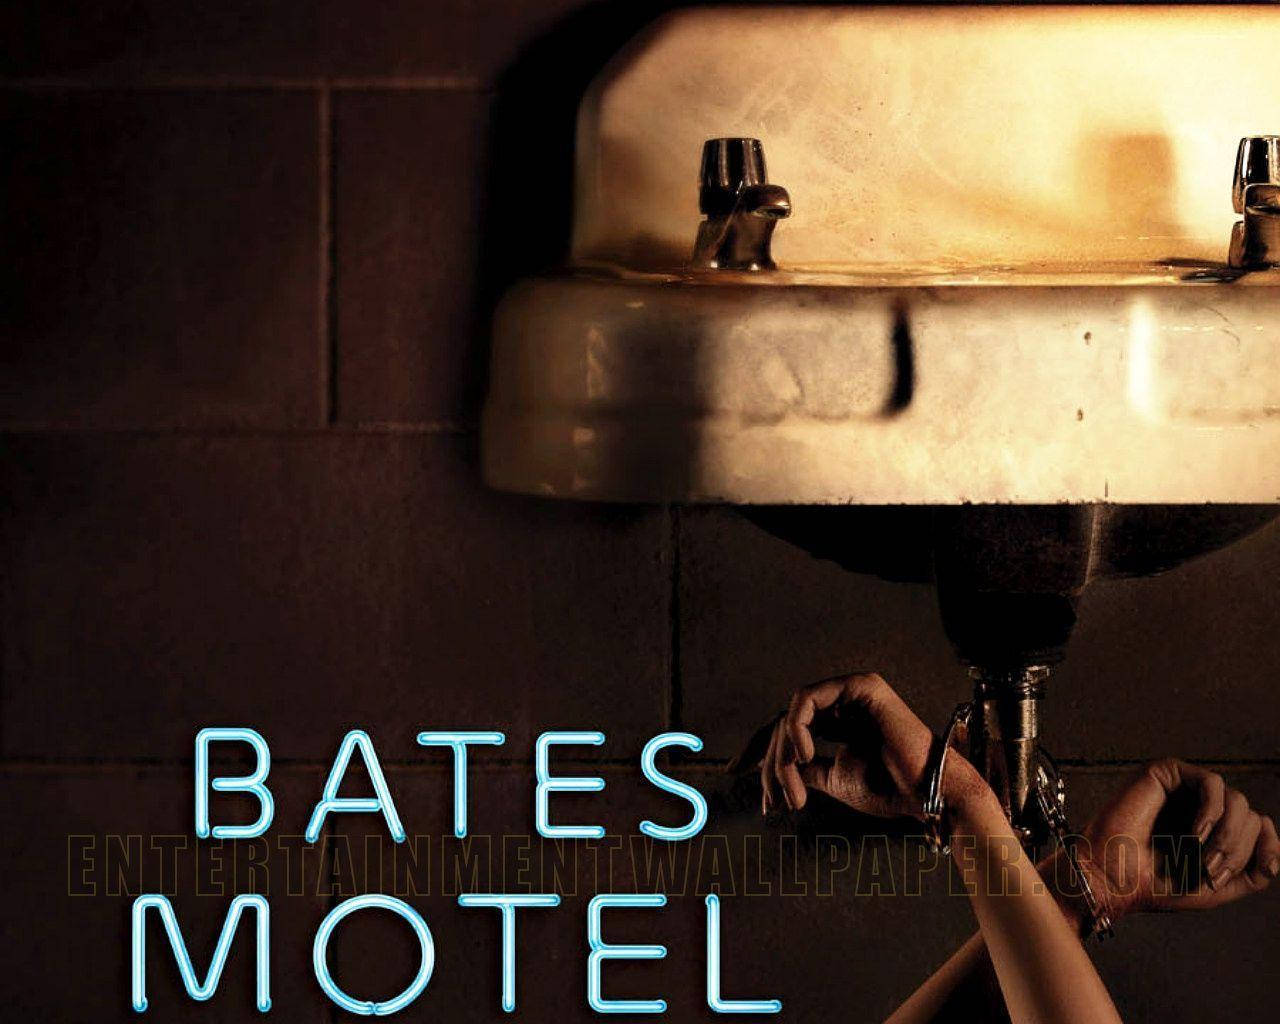 Bates Motel Handcuffed To A Sink